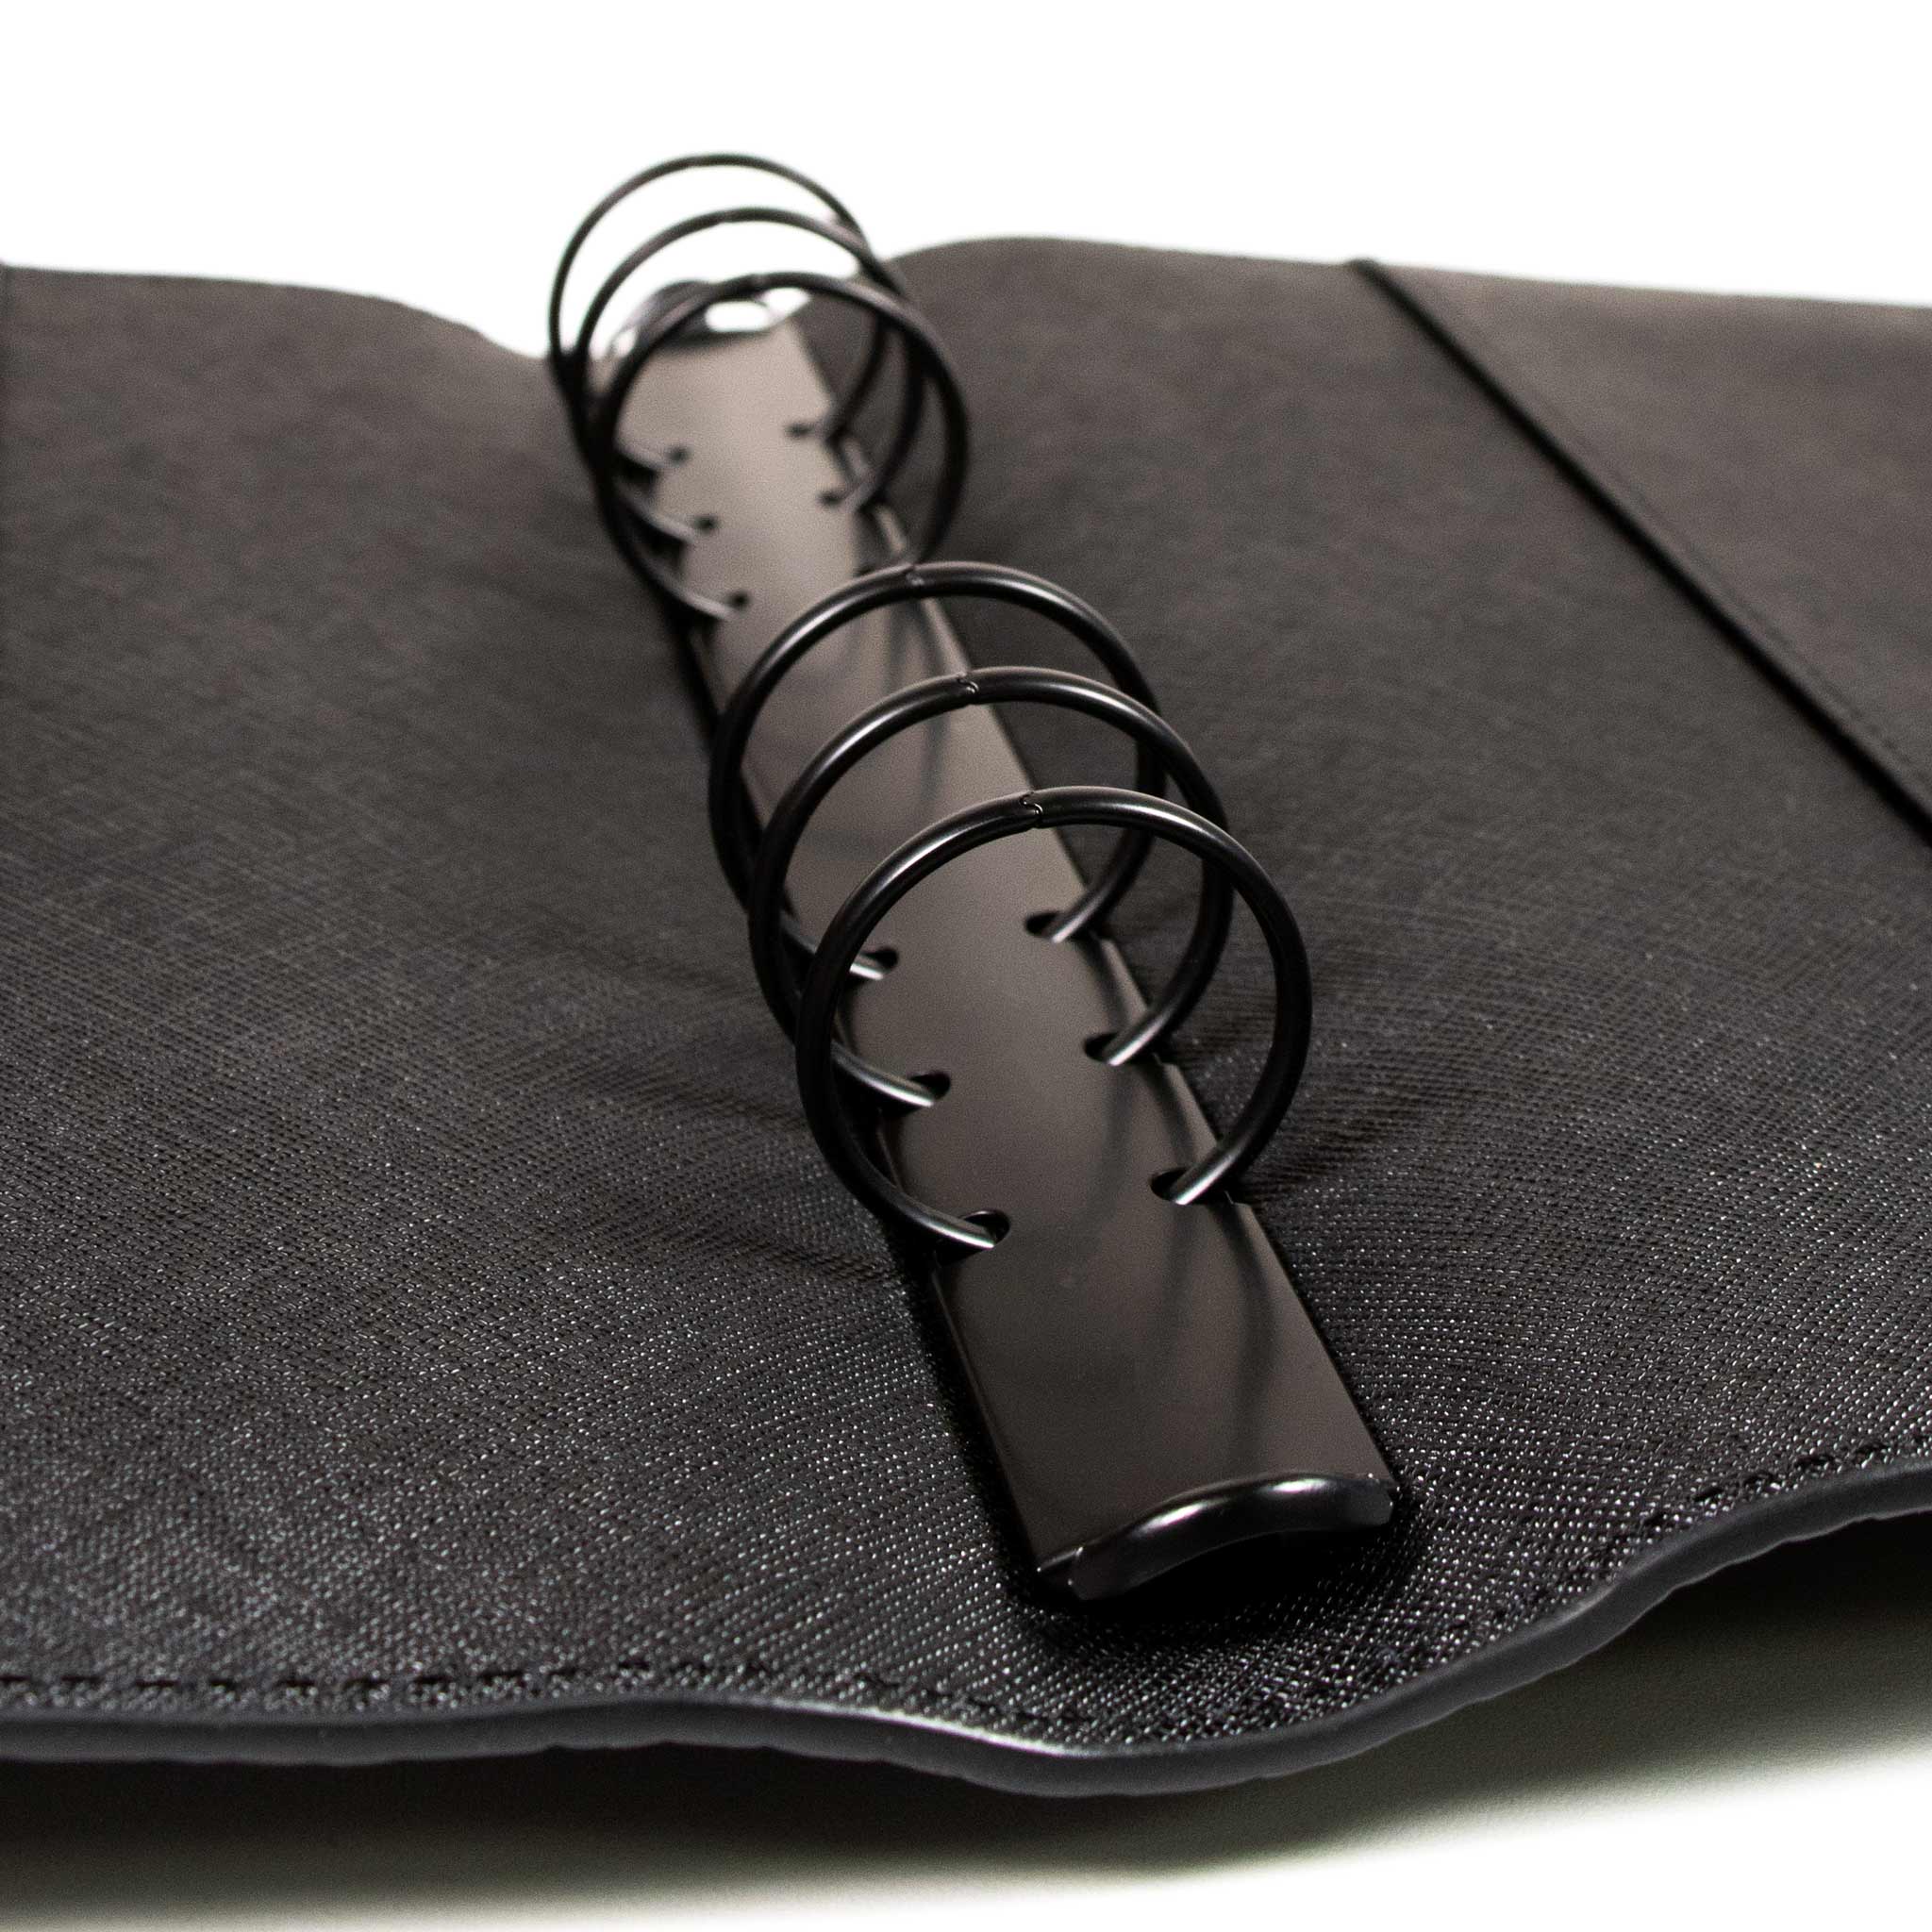 Self Adhesive Leather Pen Loop for LV PM Agenda -  Denmark